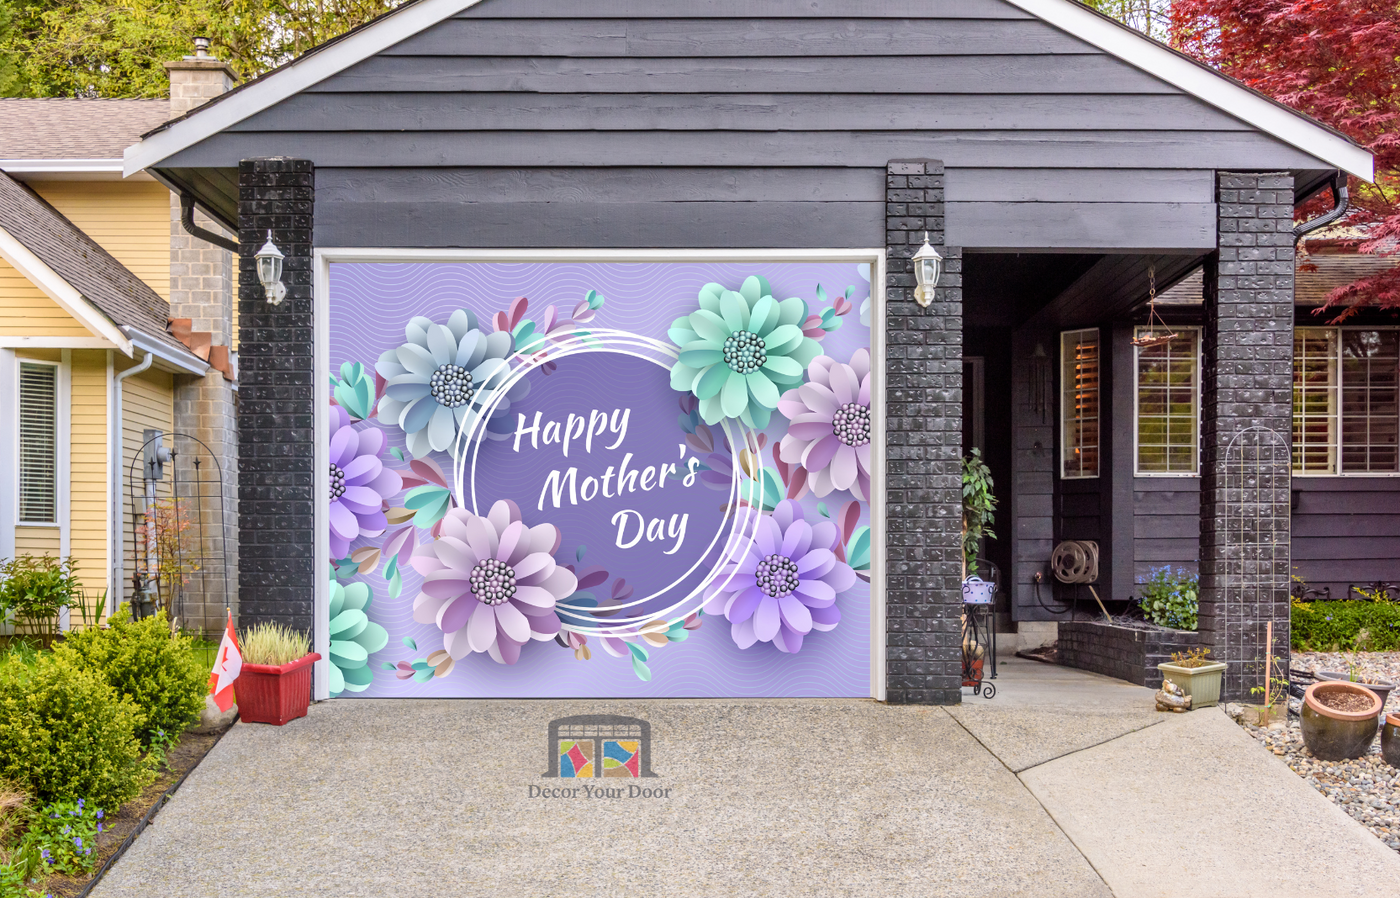 Happy Mother's Day With Purple Flowers Backdrop Garage Door Cover Banner